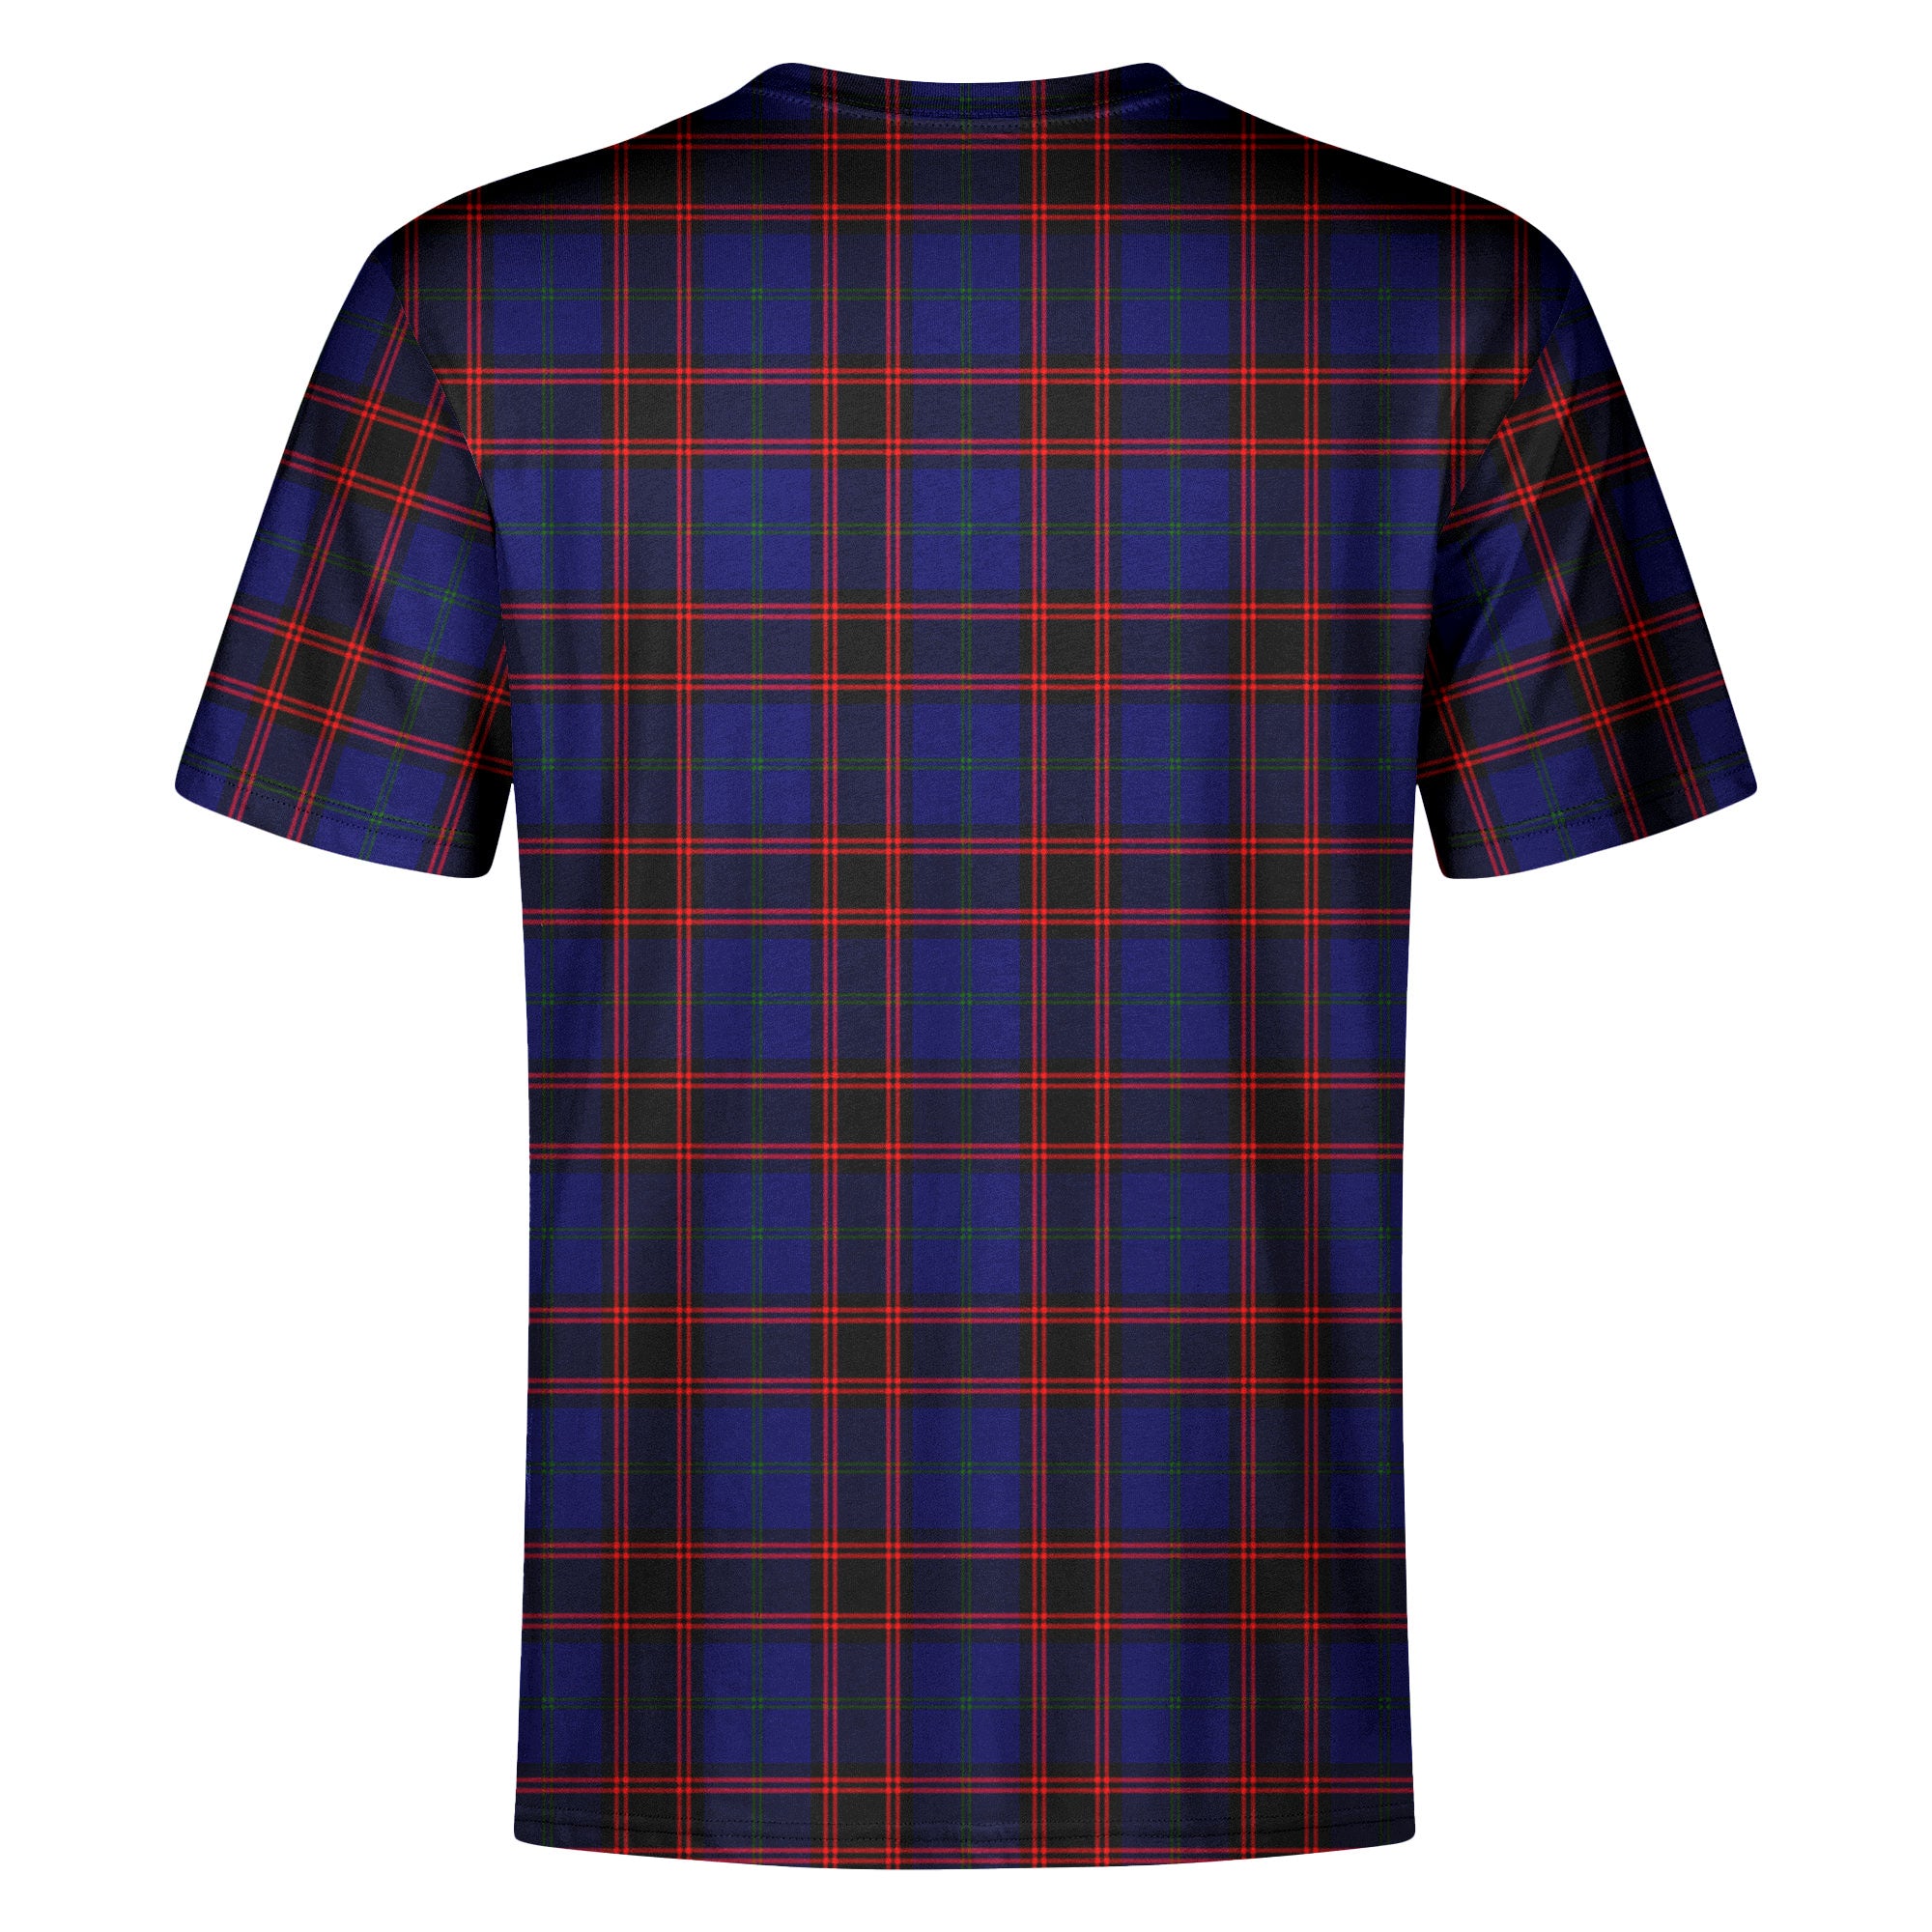 Wedderburn Tartan Crest T-shirt